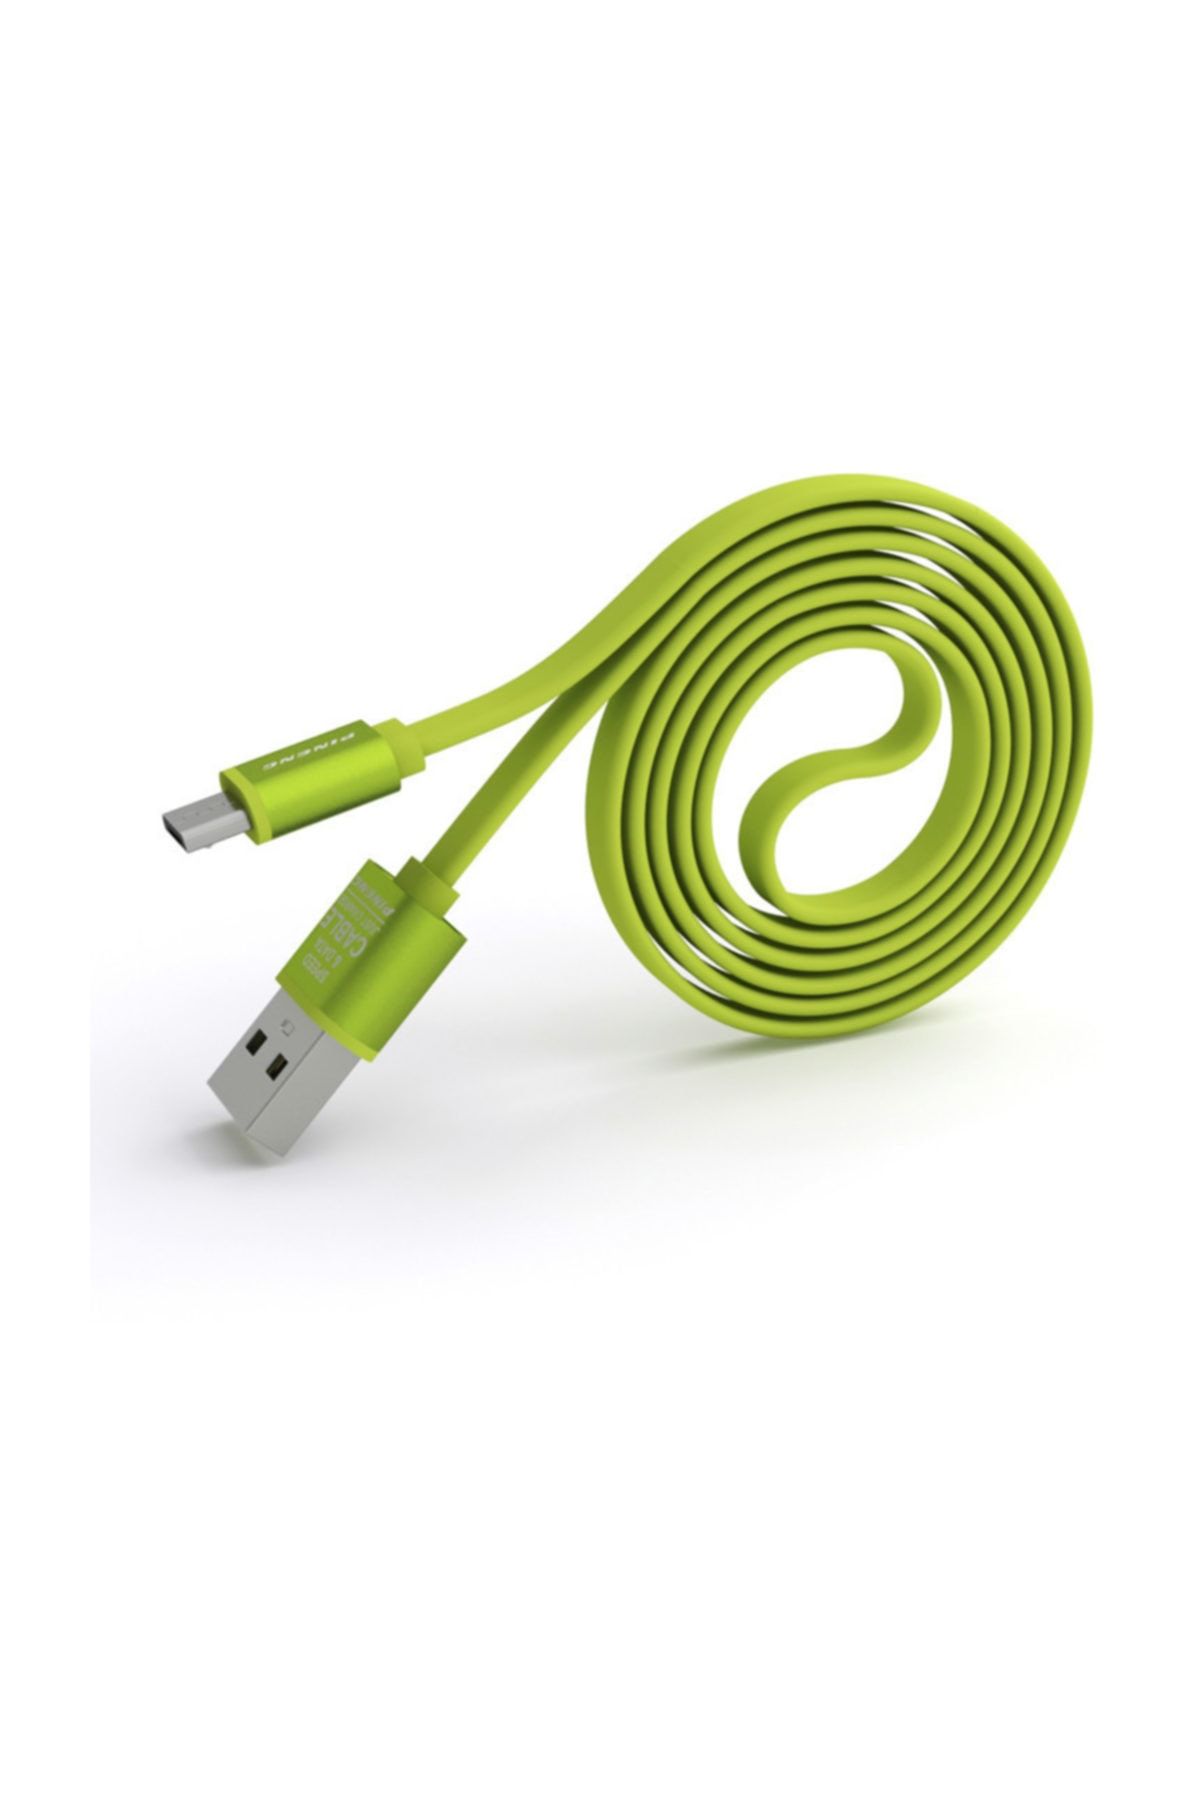 Pineng PN-303 Yüksek Hızlı Micro USB Yeşil Data Sarj Kablosu